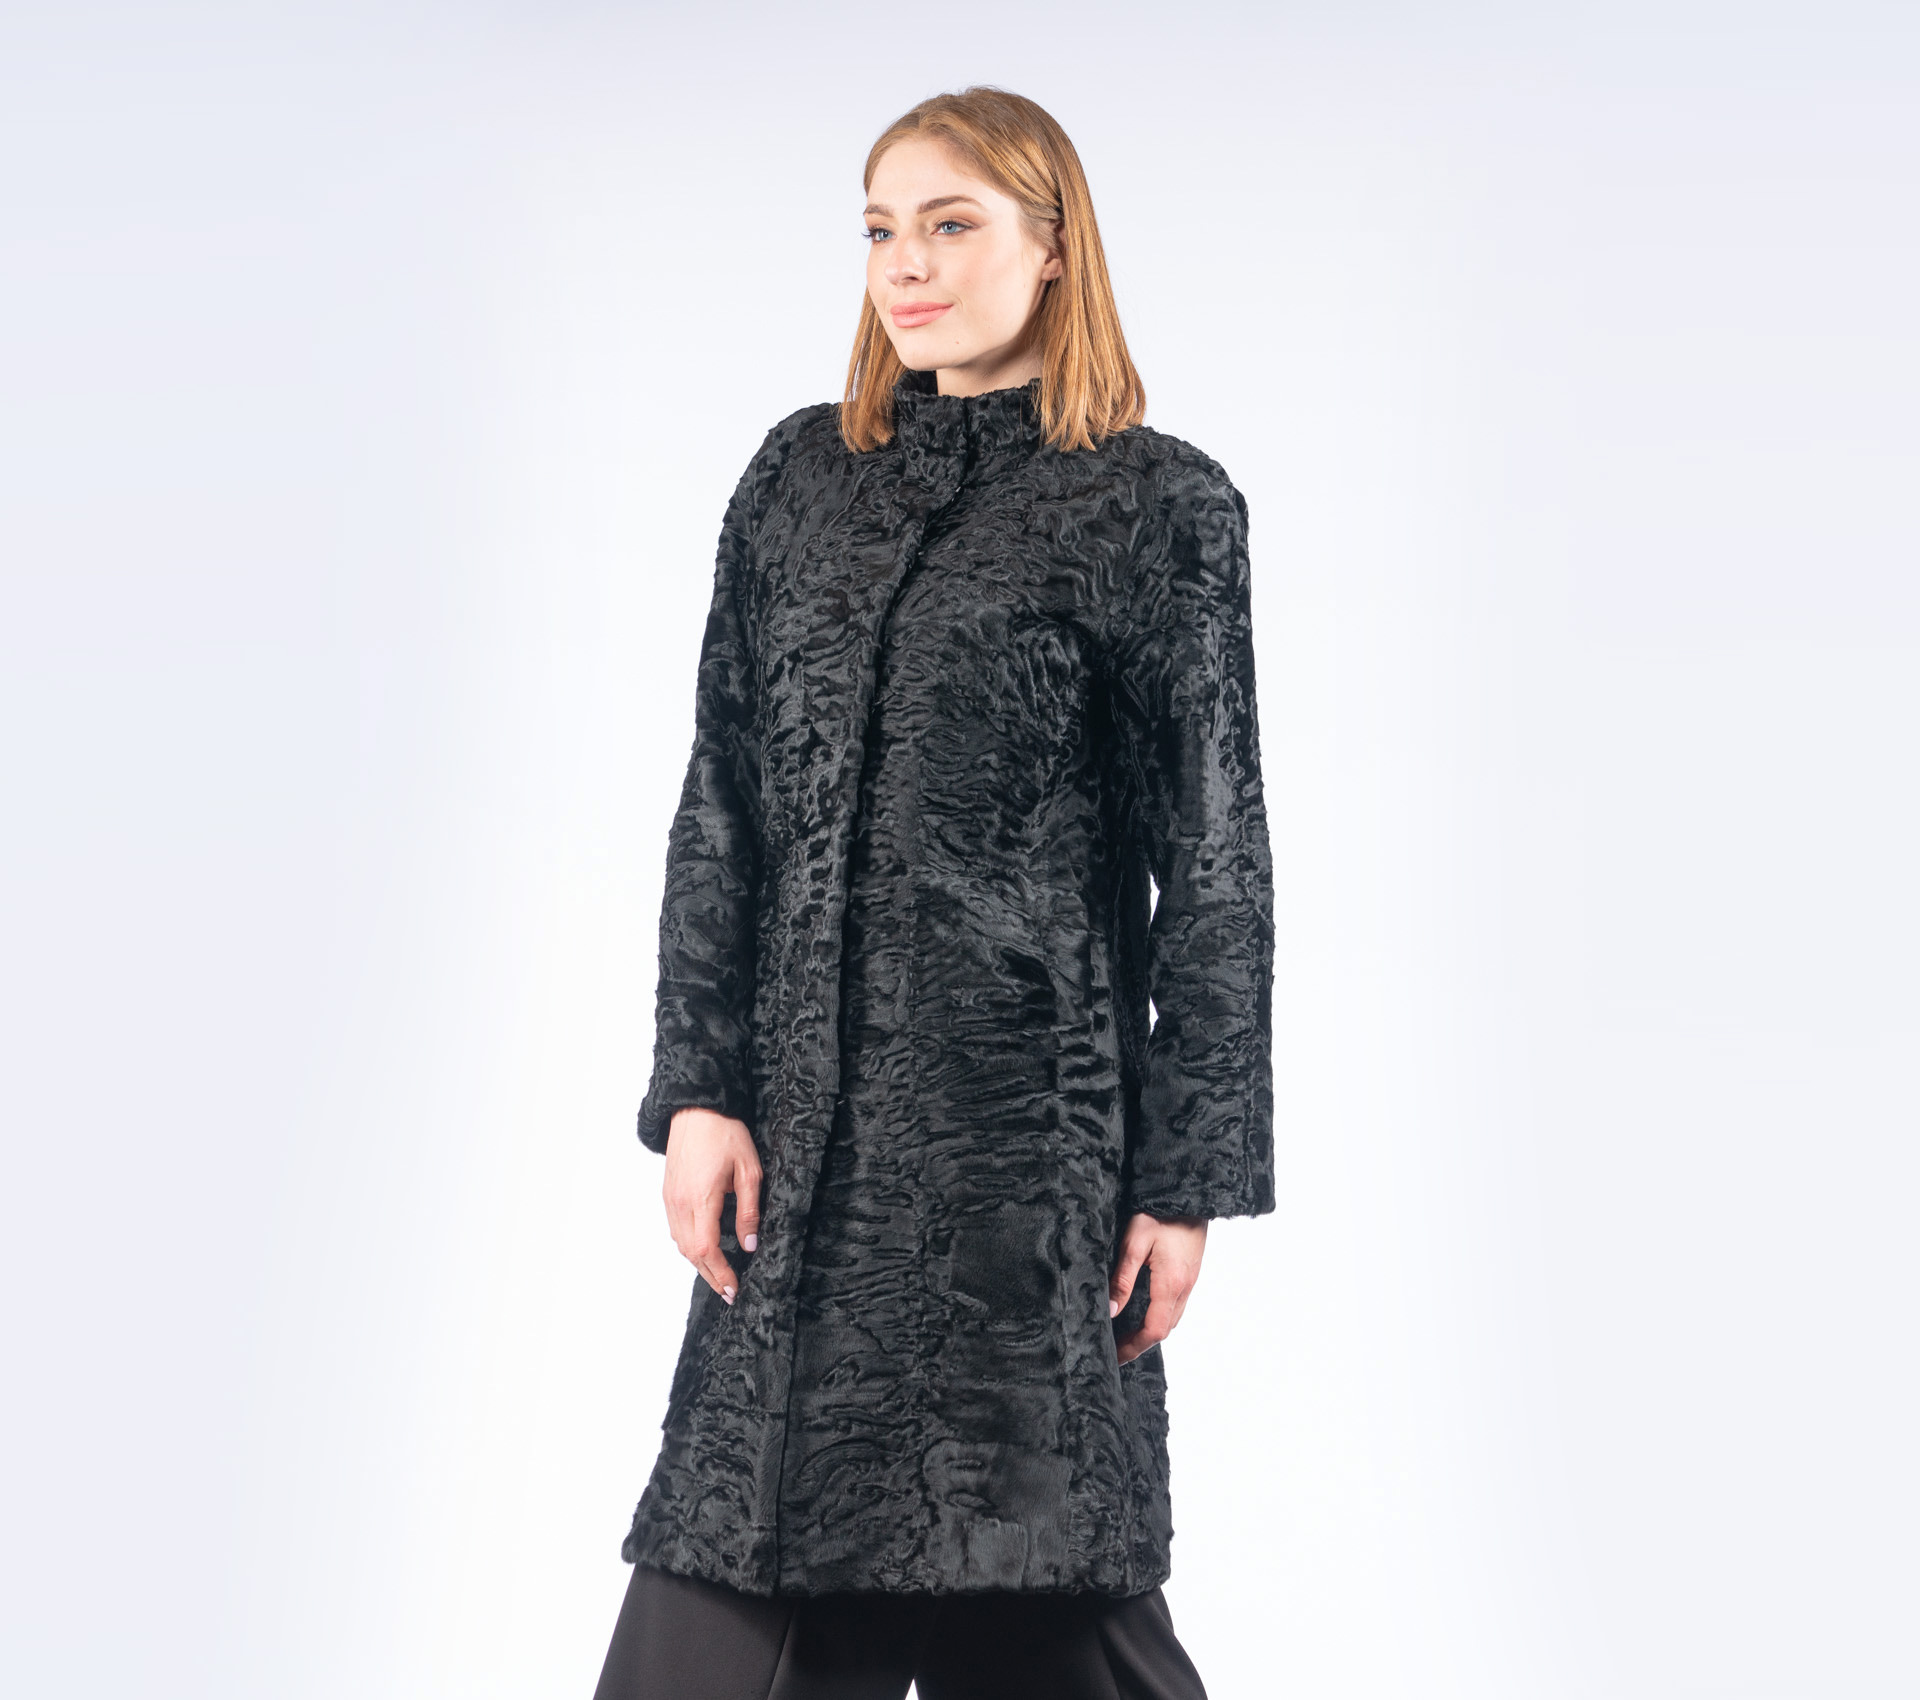 Astrakhan Fur Jacket In Black Color- 100% Real Fur Coats - Haute Acorn